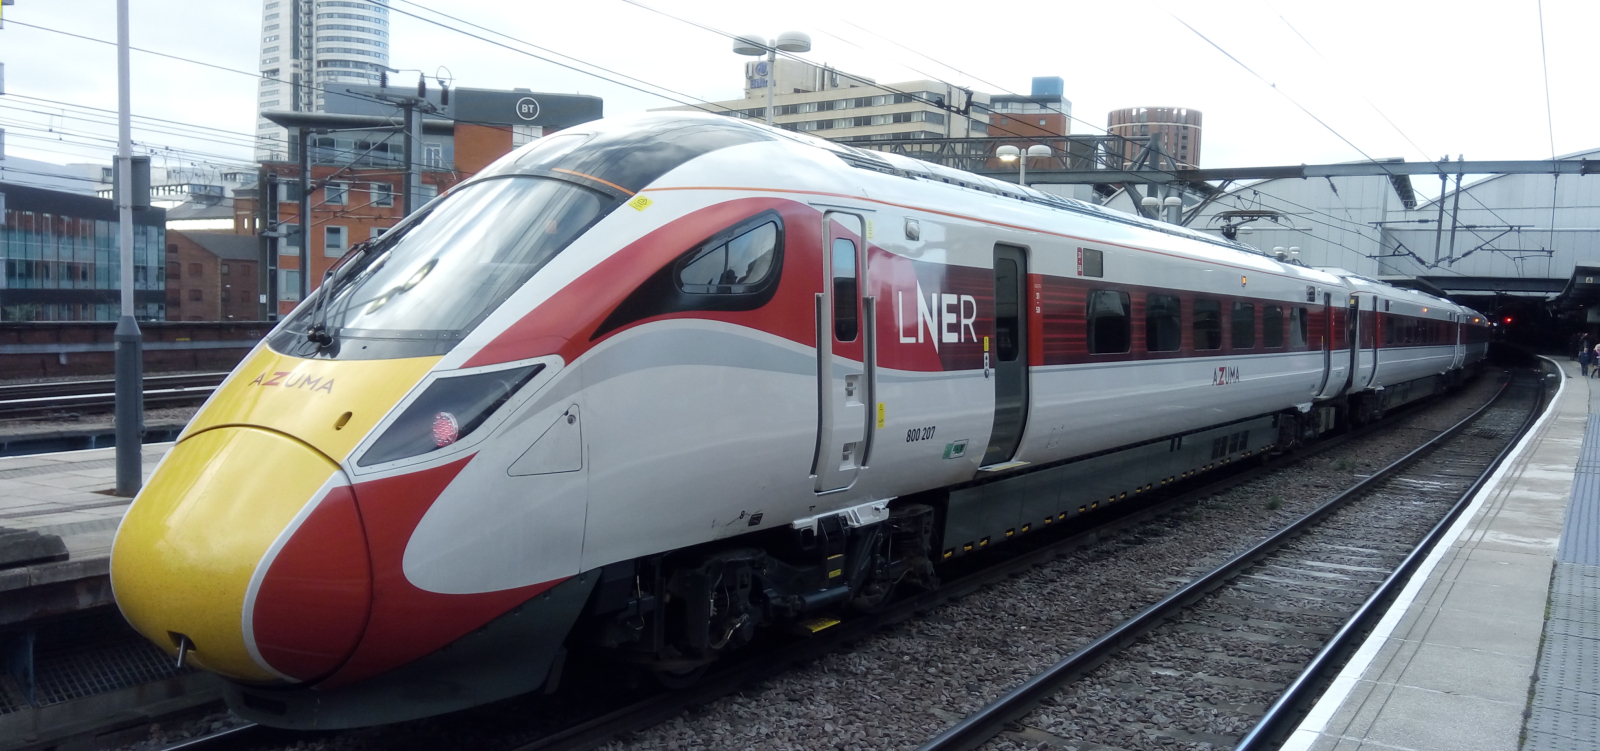 LNER 800207 in Leeds in February 2020